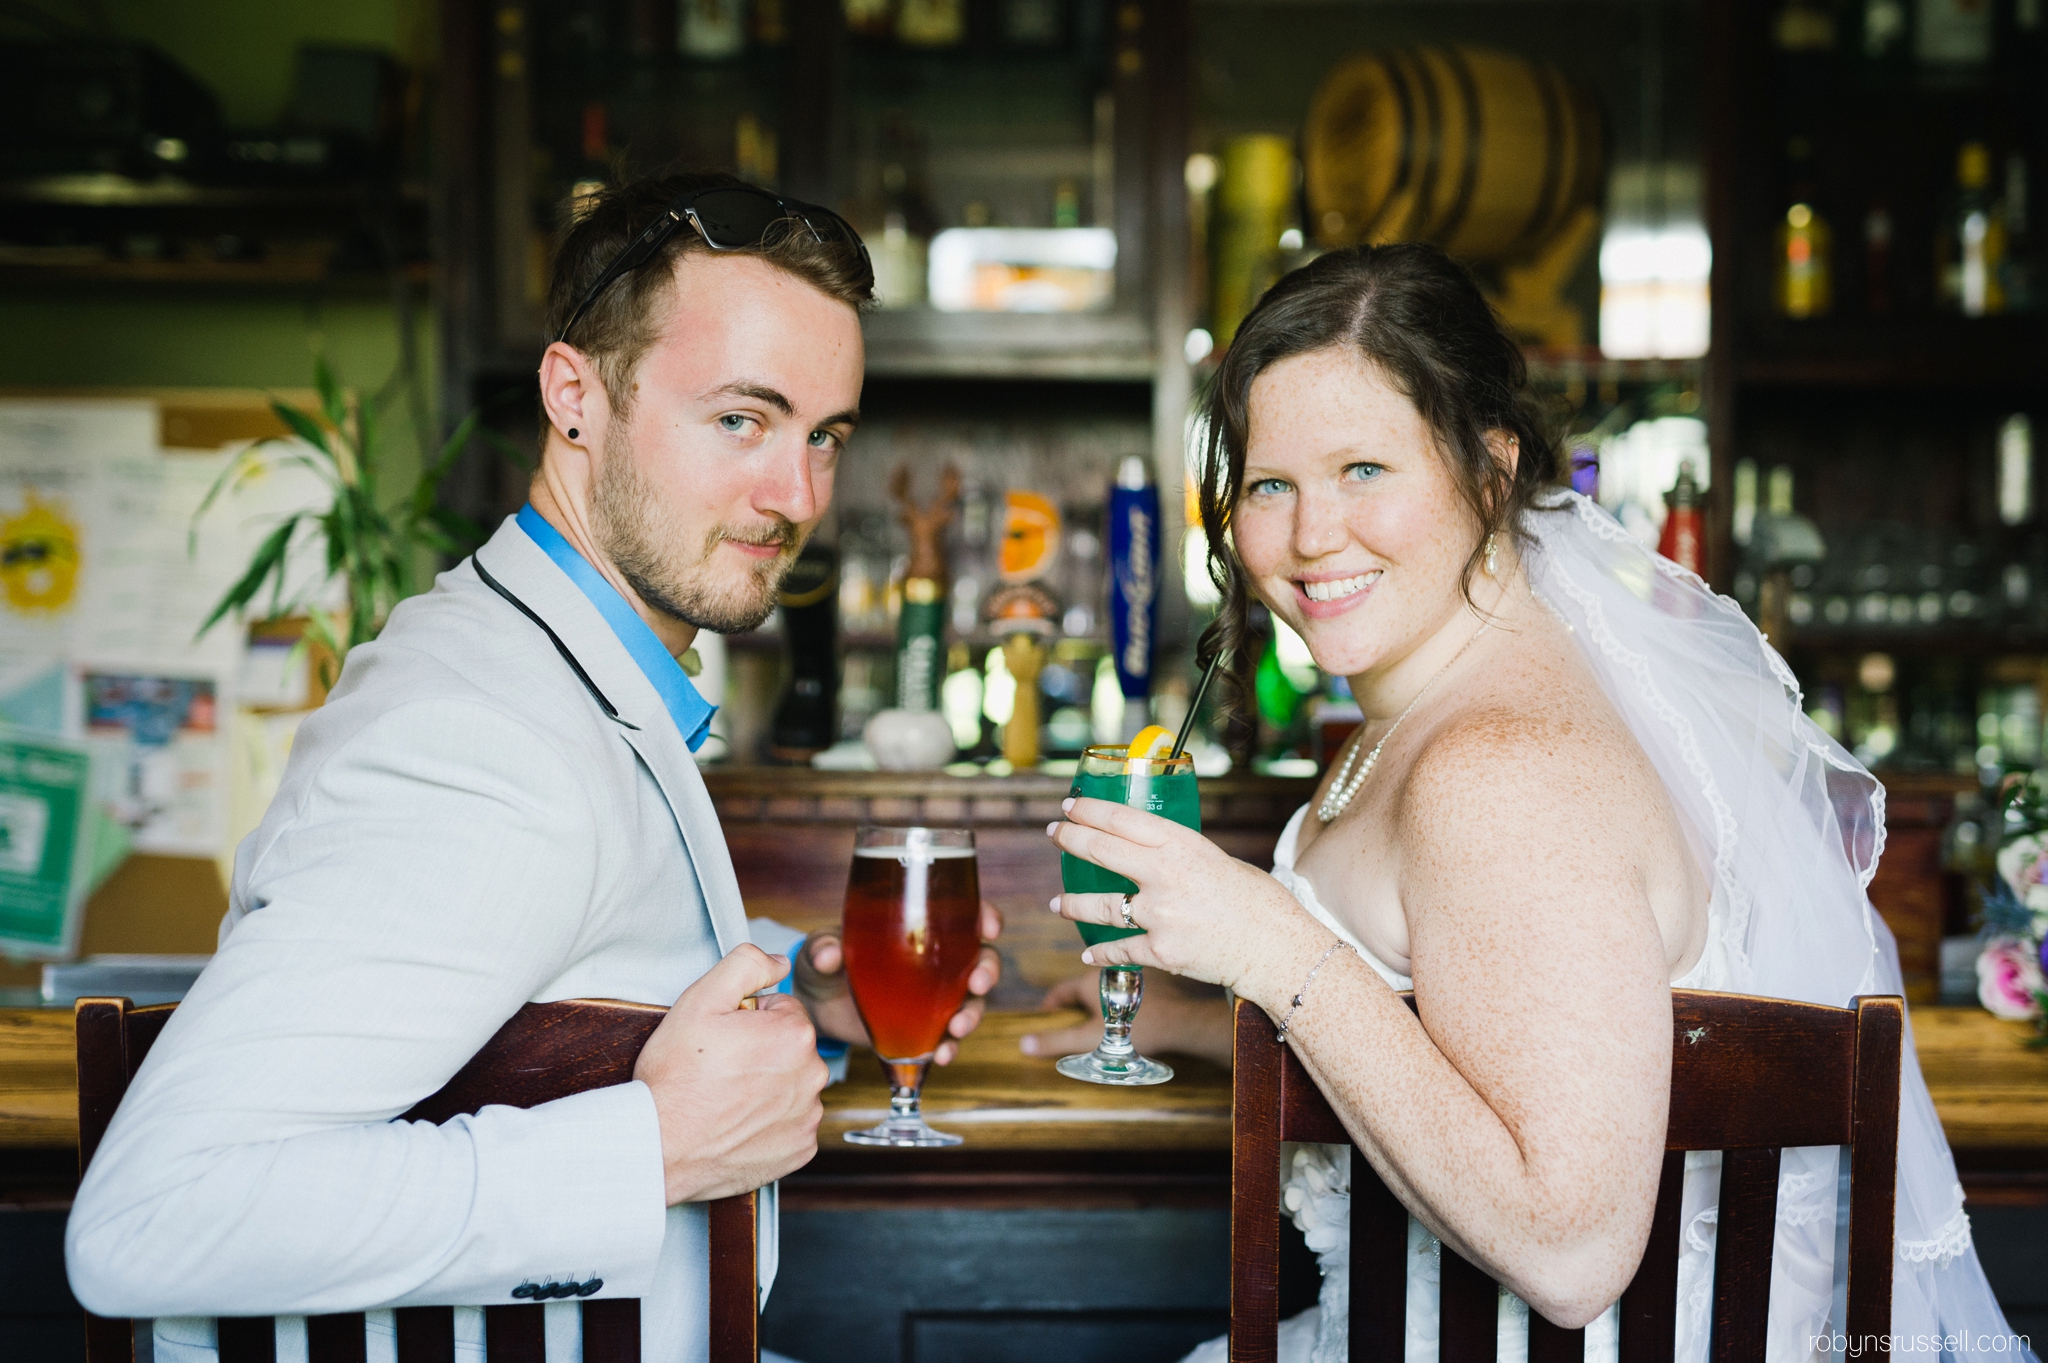 39-bride-and-groom-having-a-drink-on-wedding-day.jpg